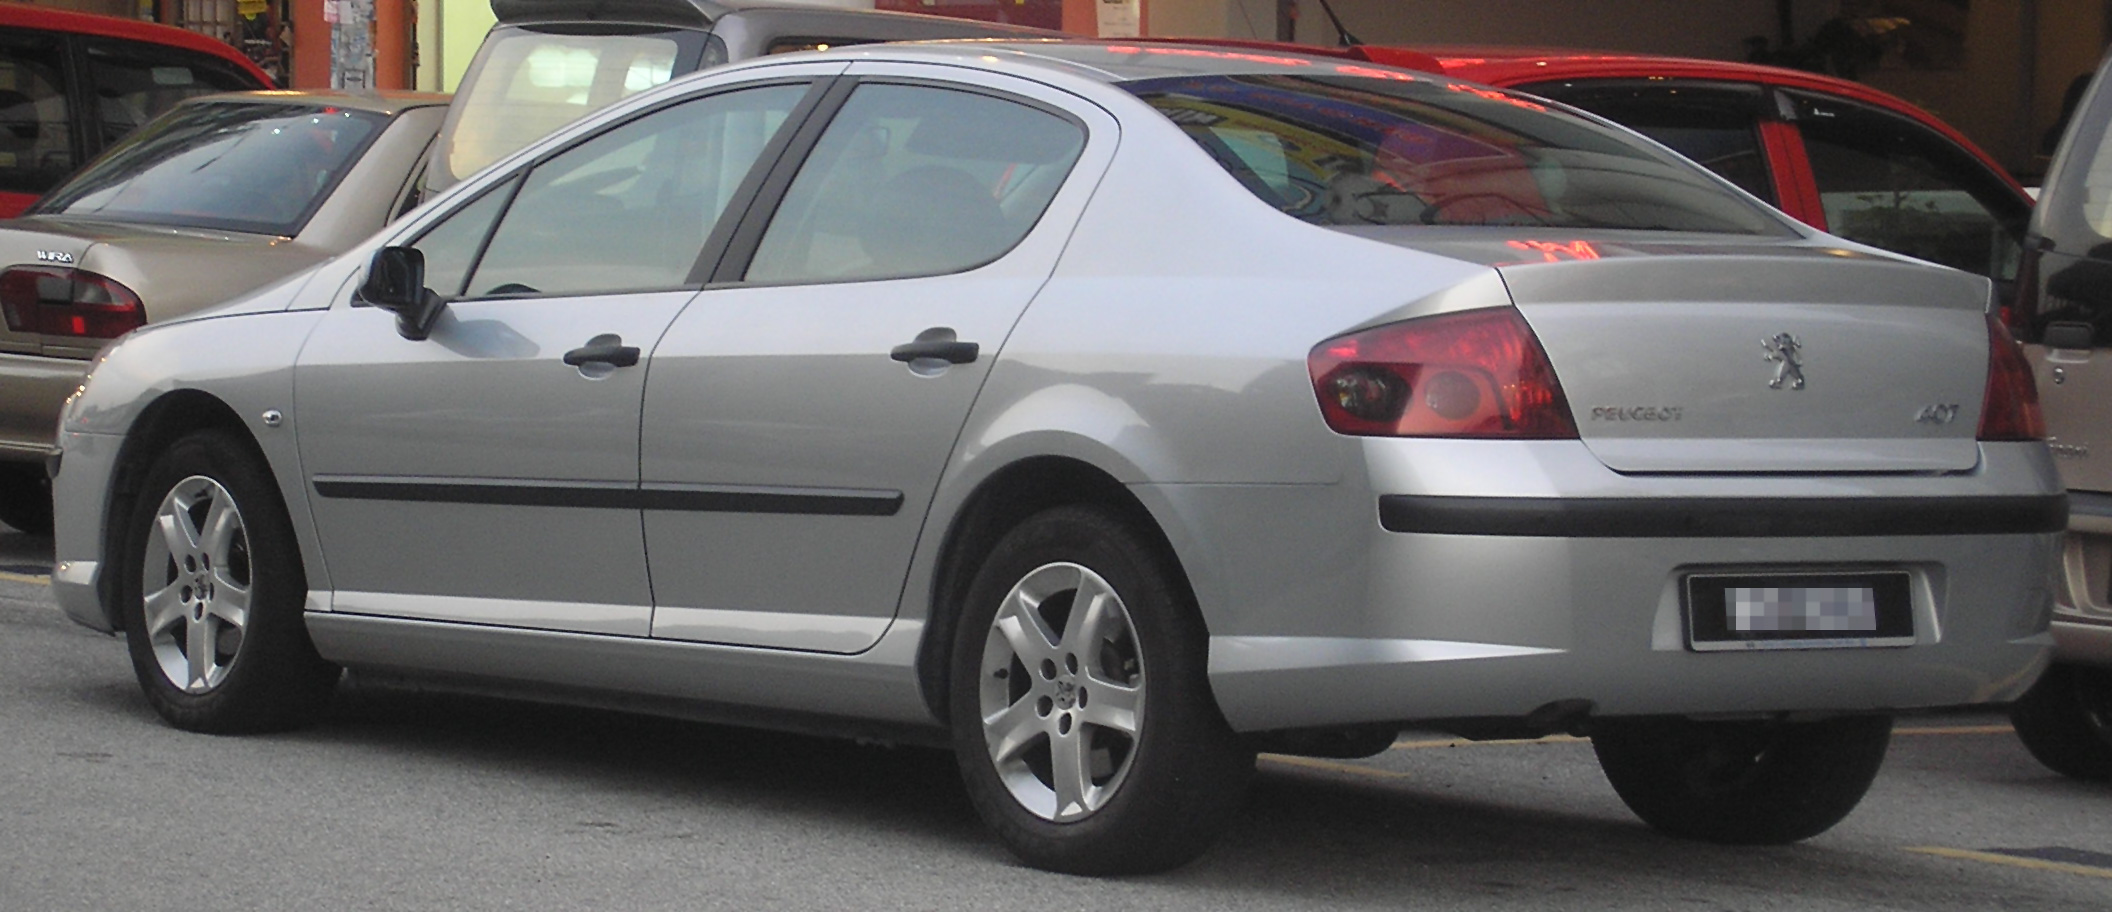 Archivo:Peugeot 407 (first generation) (rear), Serdang.jpg